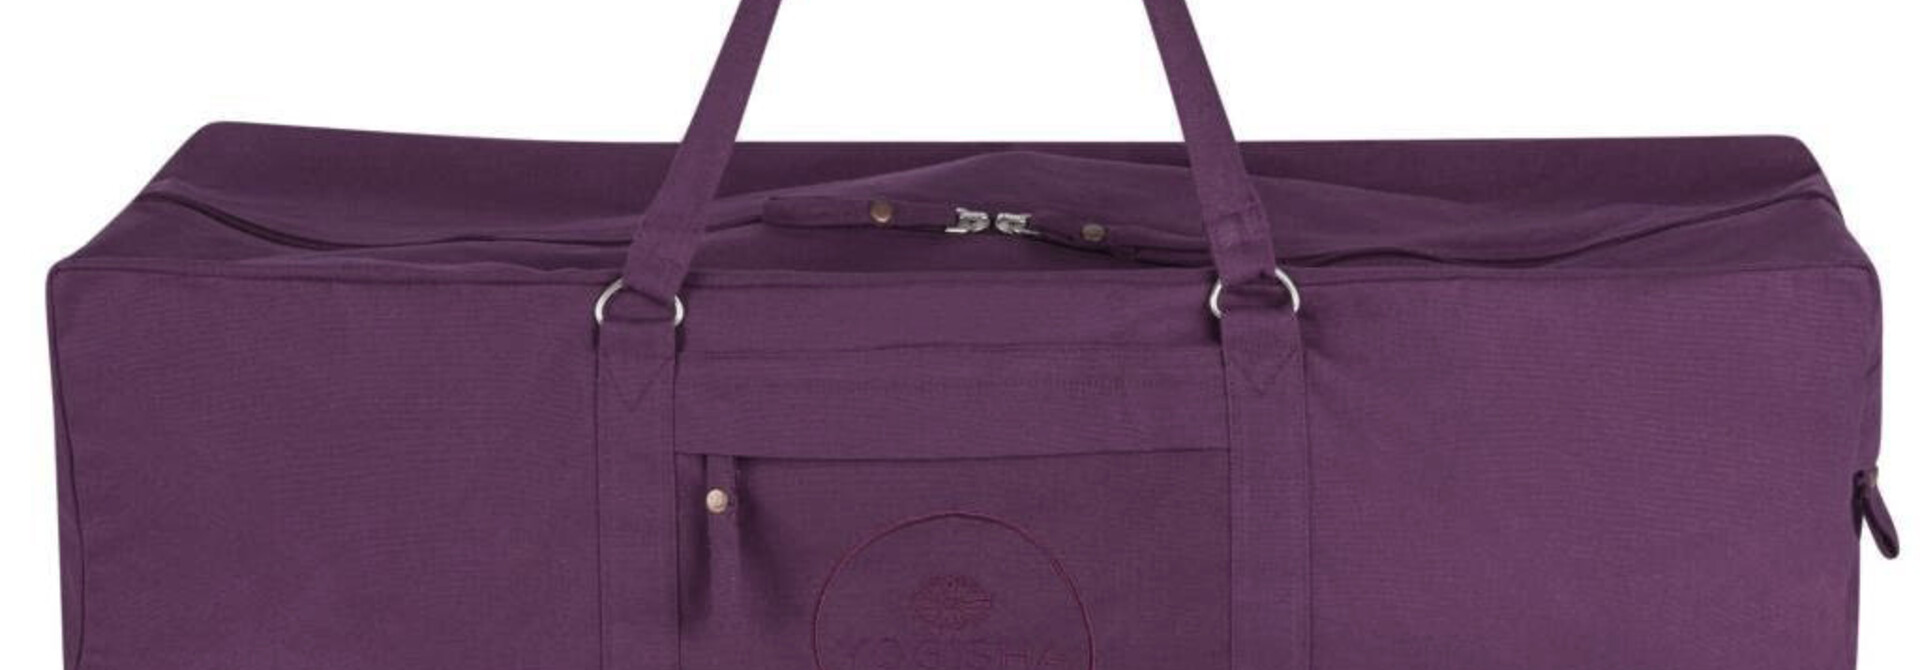 Yogisha Large Yoga Bag with Short Handles - Purple